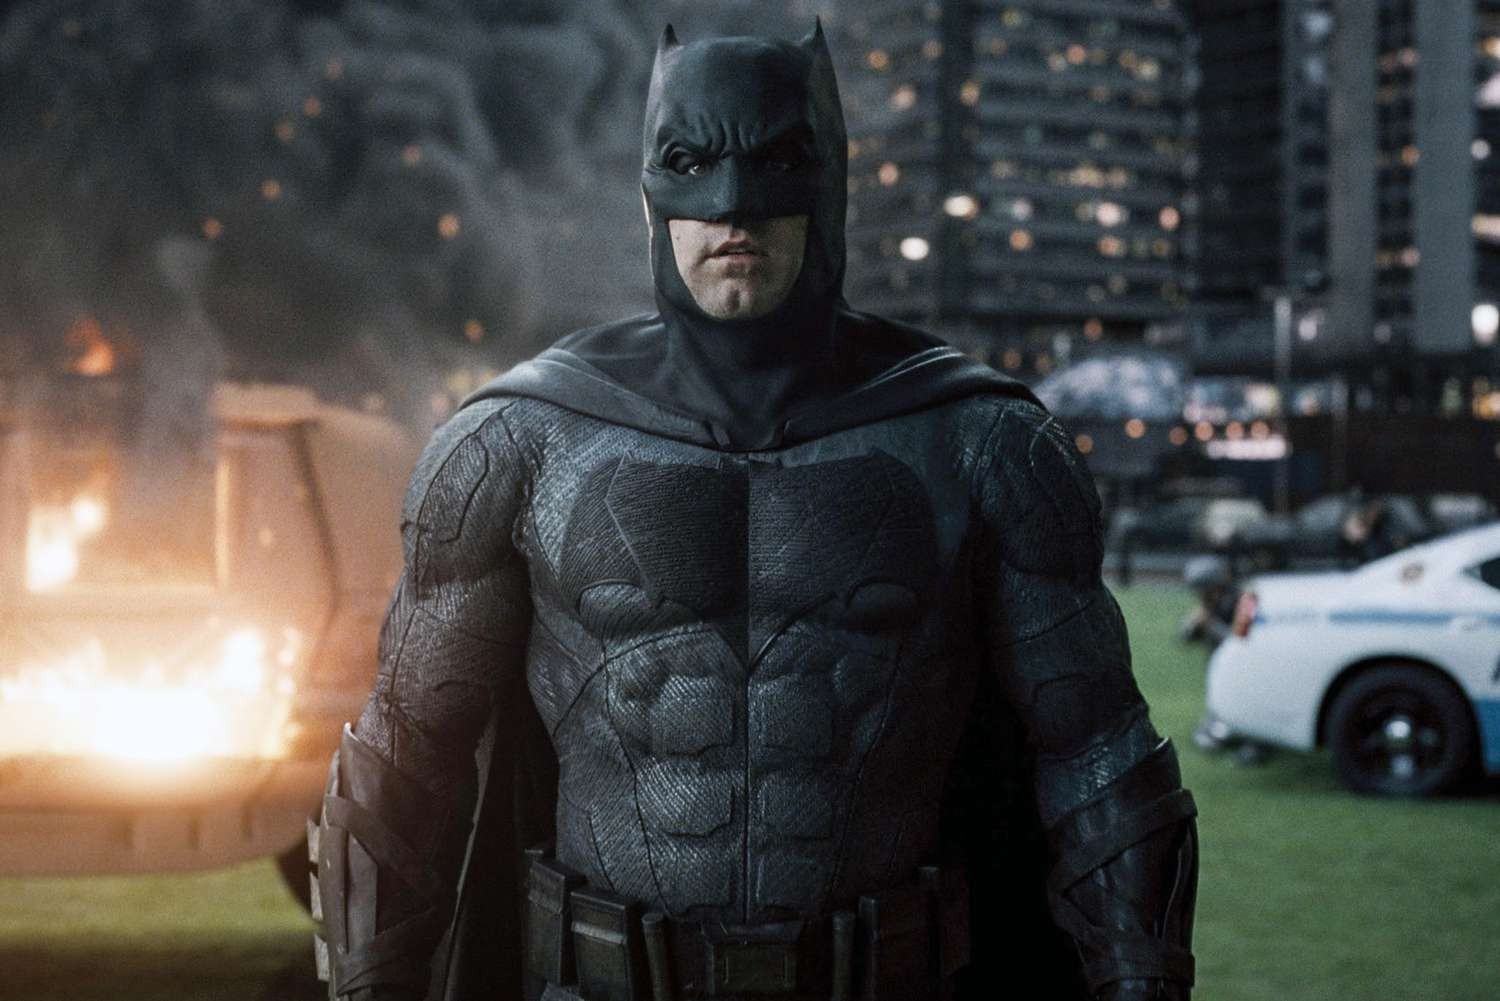 Ben Affleck played an older Batman in Zack Snyder's Justice League